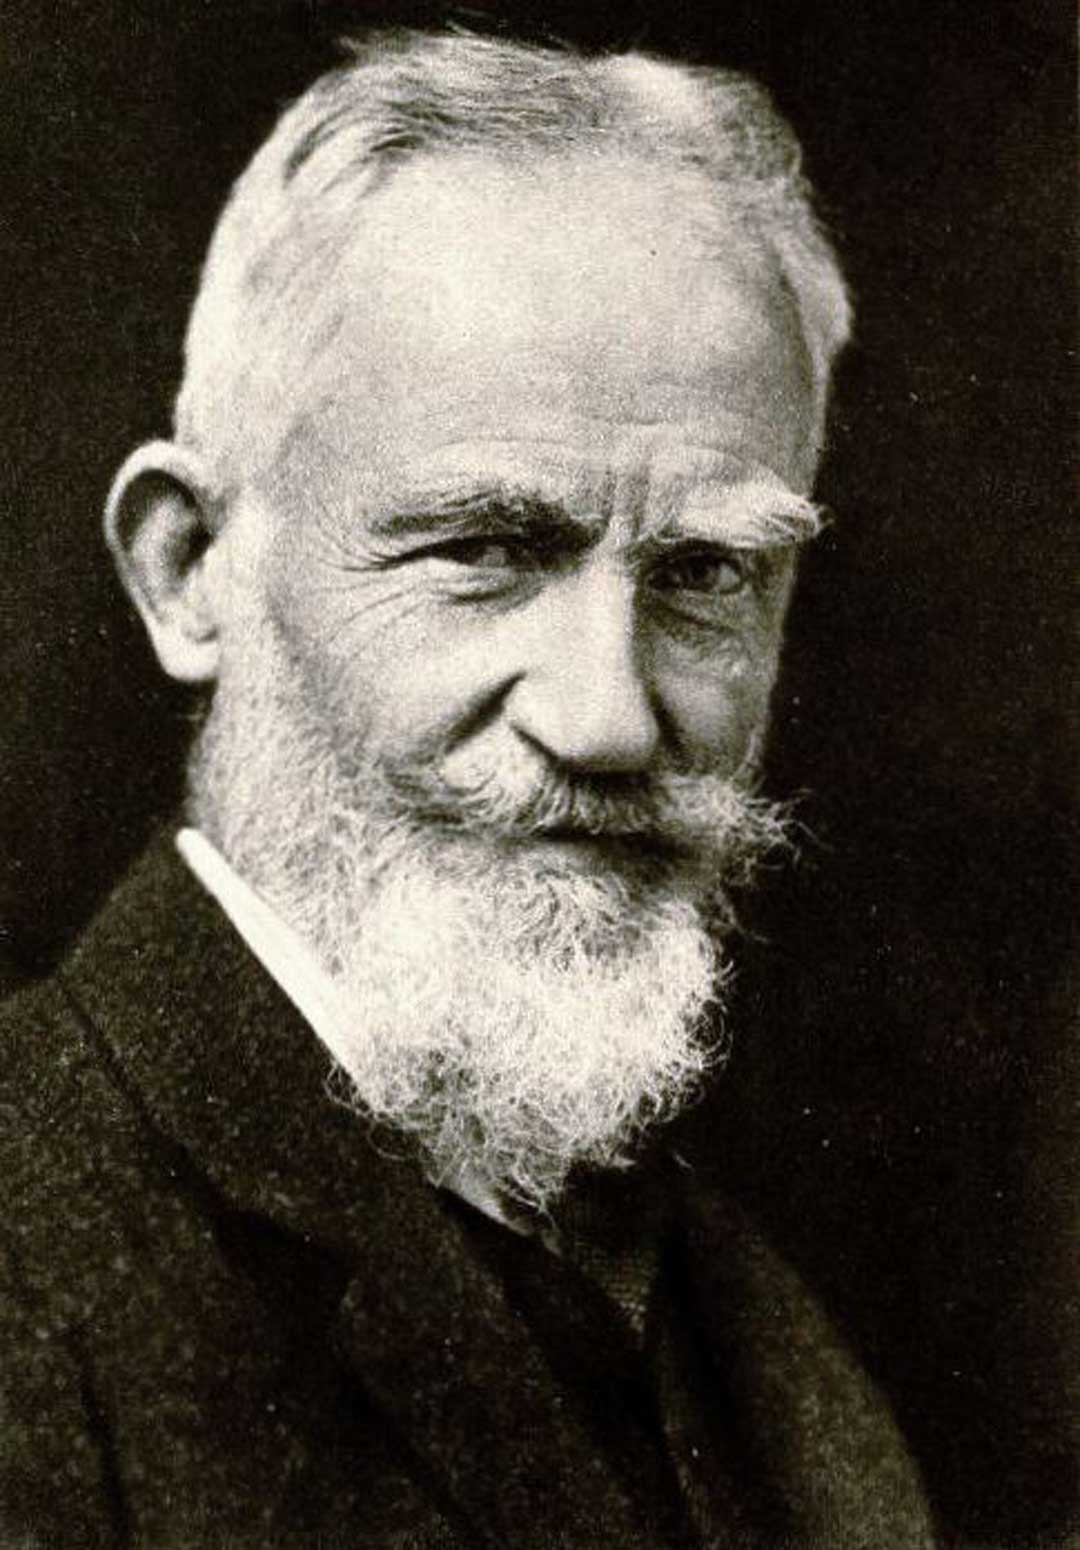 The portrait of George Bernard Shaw